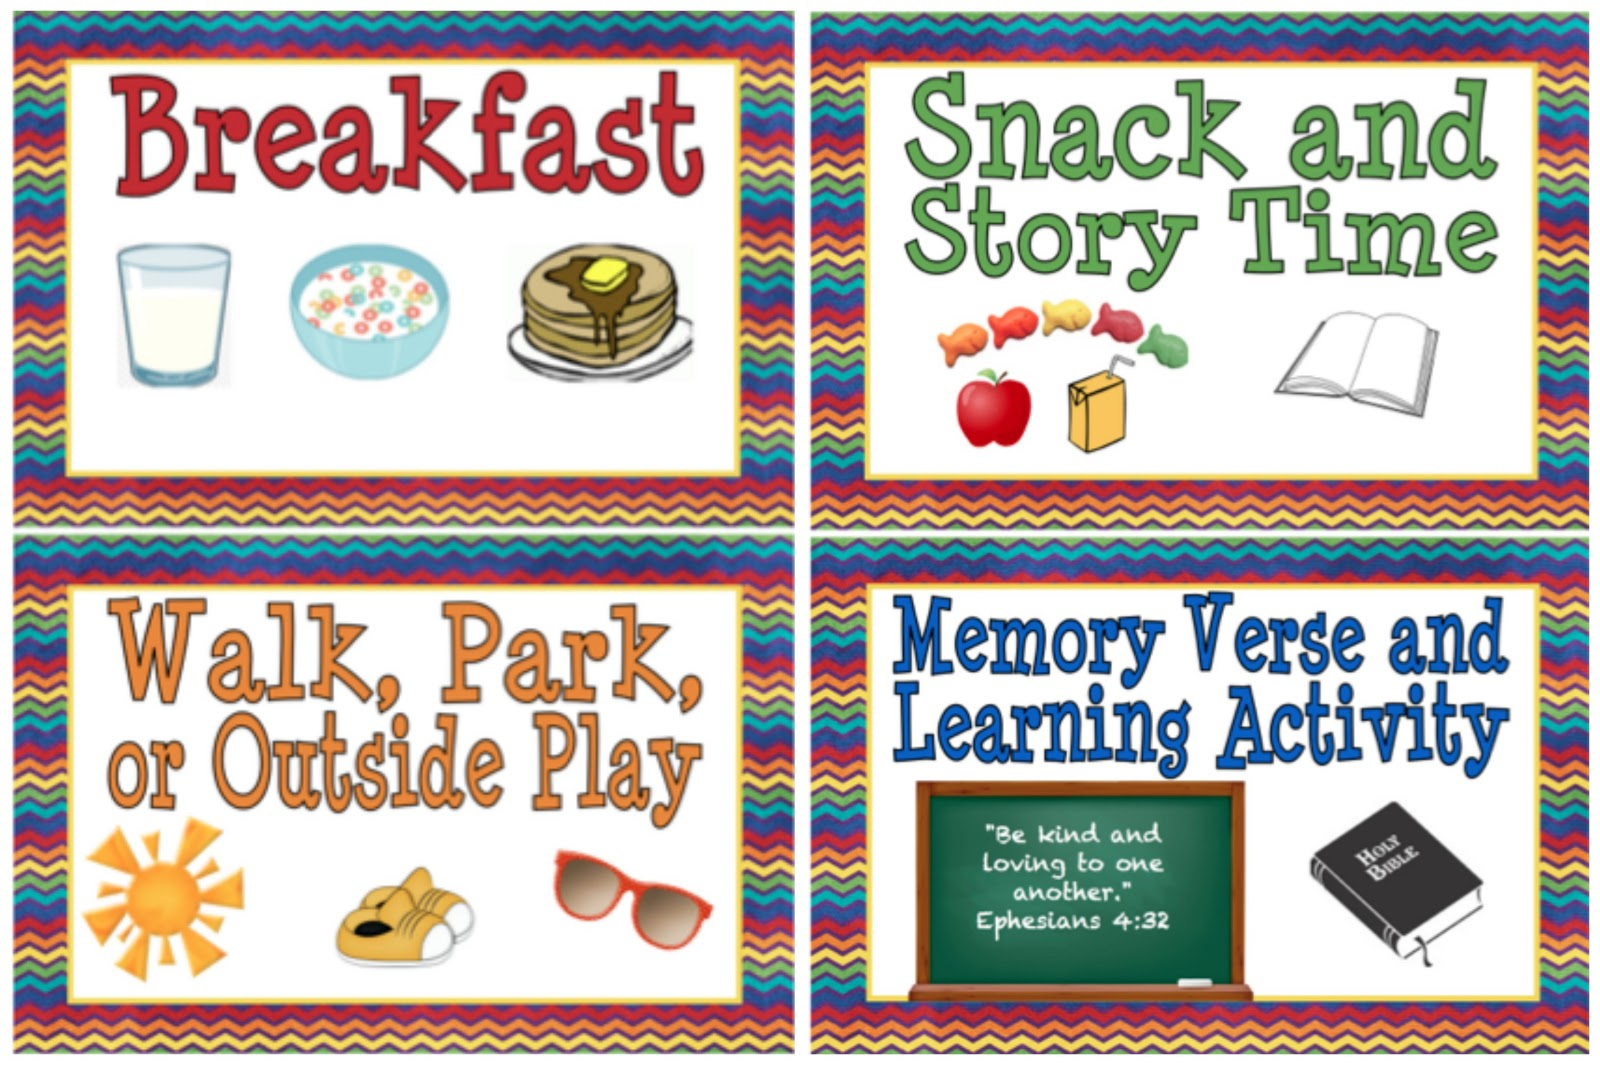 Printable Schedule Cards For Preschool | Download Them Or Print - Free Printable Schedule Cards For Preschool